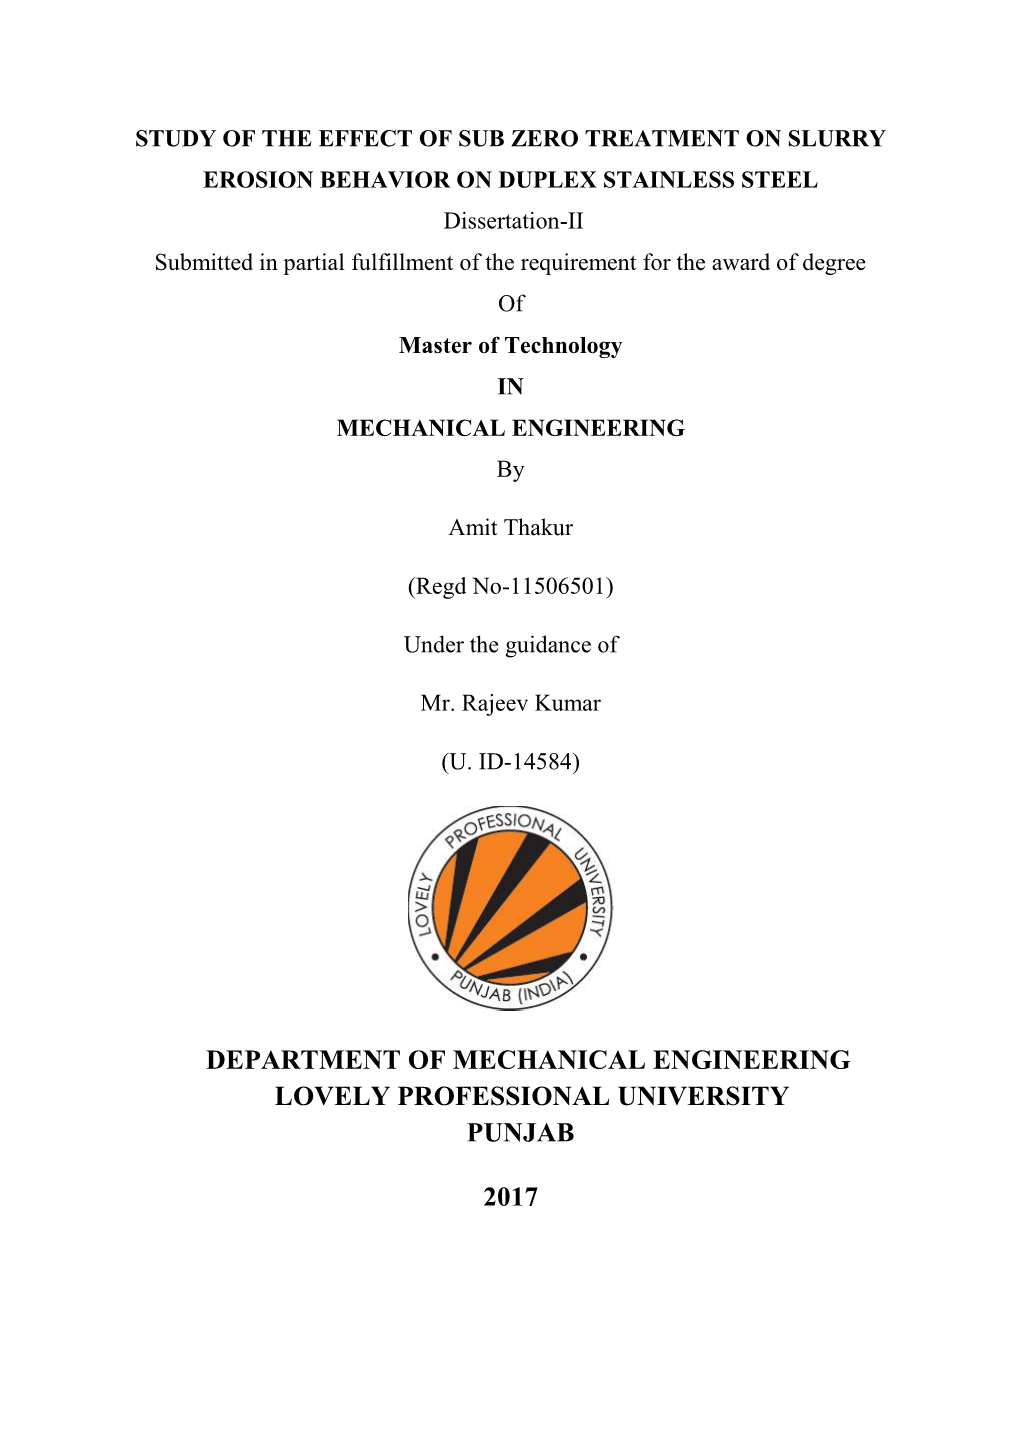 Department of Mechanical Engineering Lovely Professional University Punjab